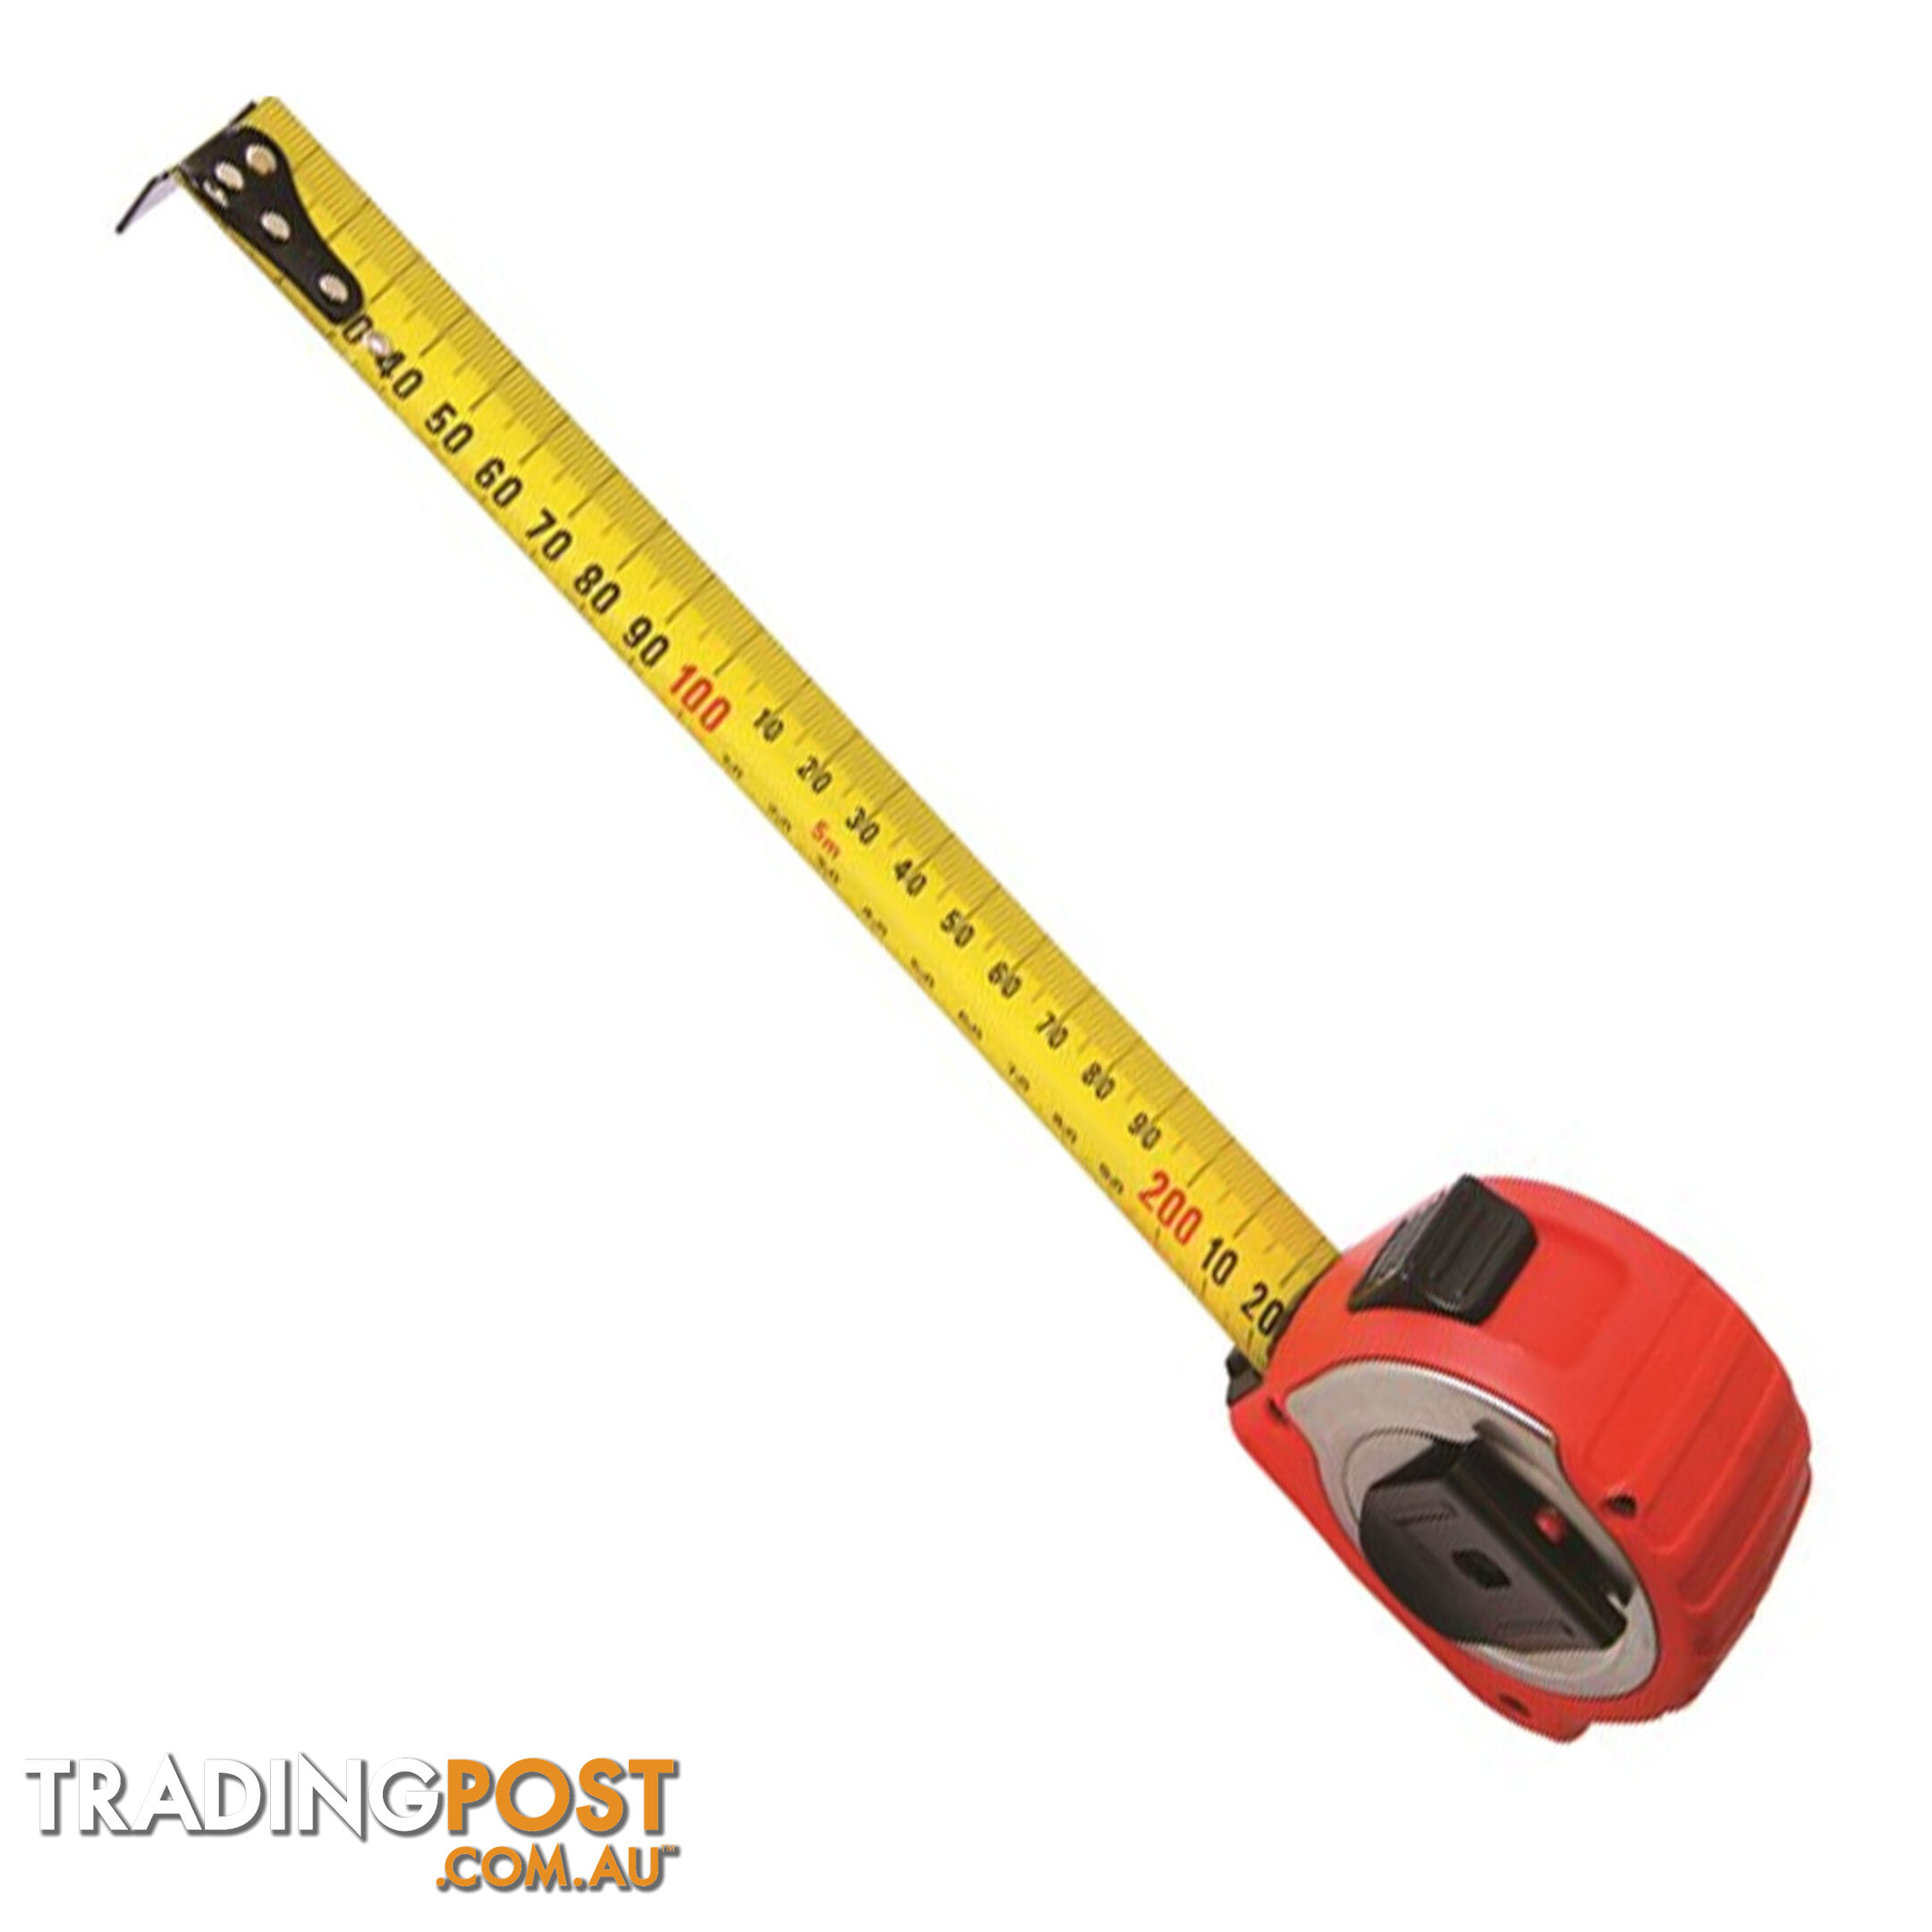 Toledo Measuring Tape Wide Blade Steel Metric 5m Stop Lock Function Heavy Duty SKU - 321905